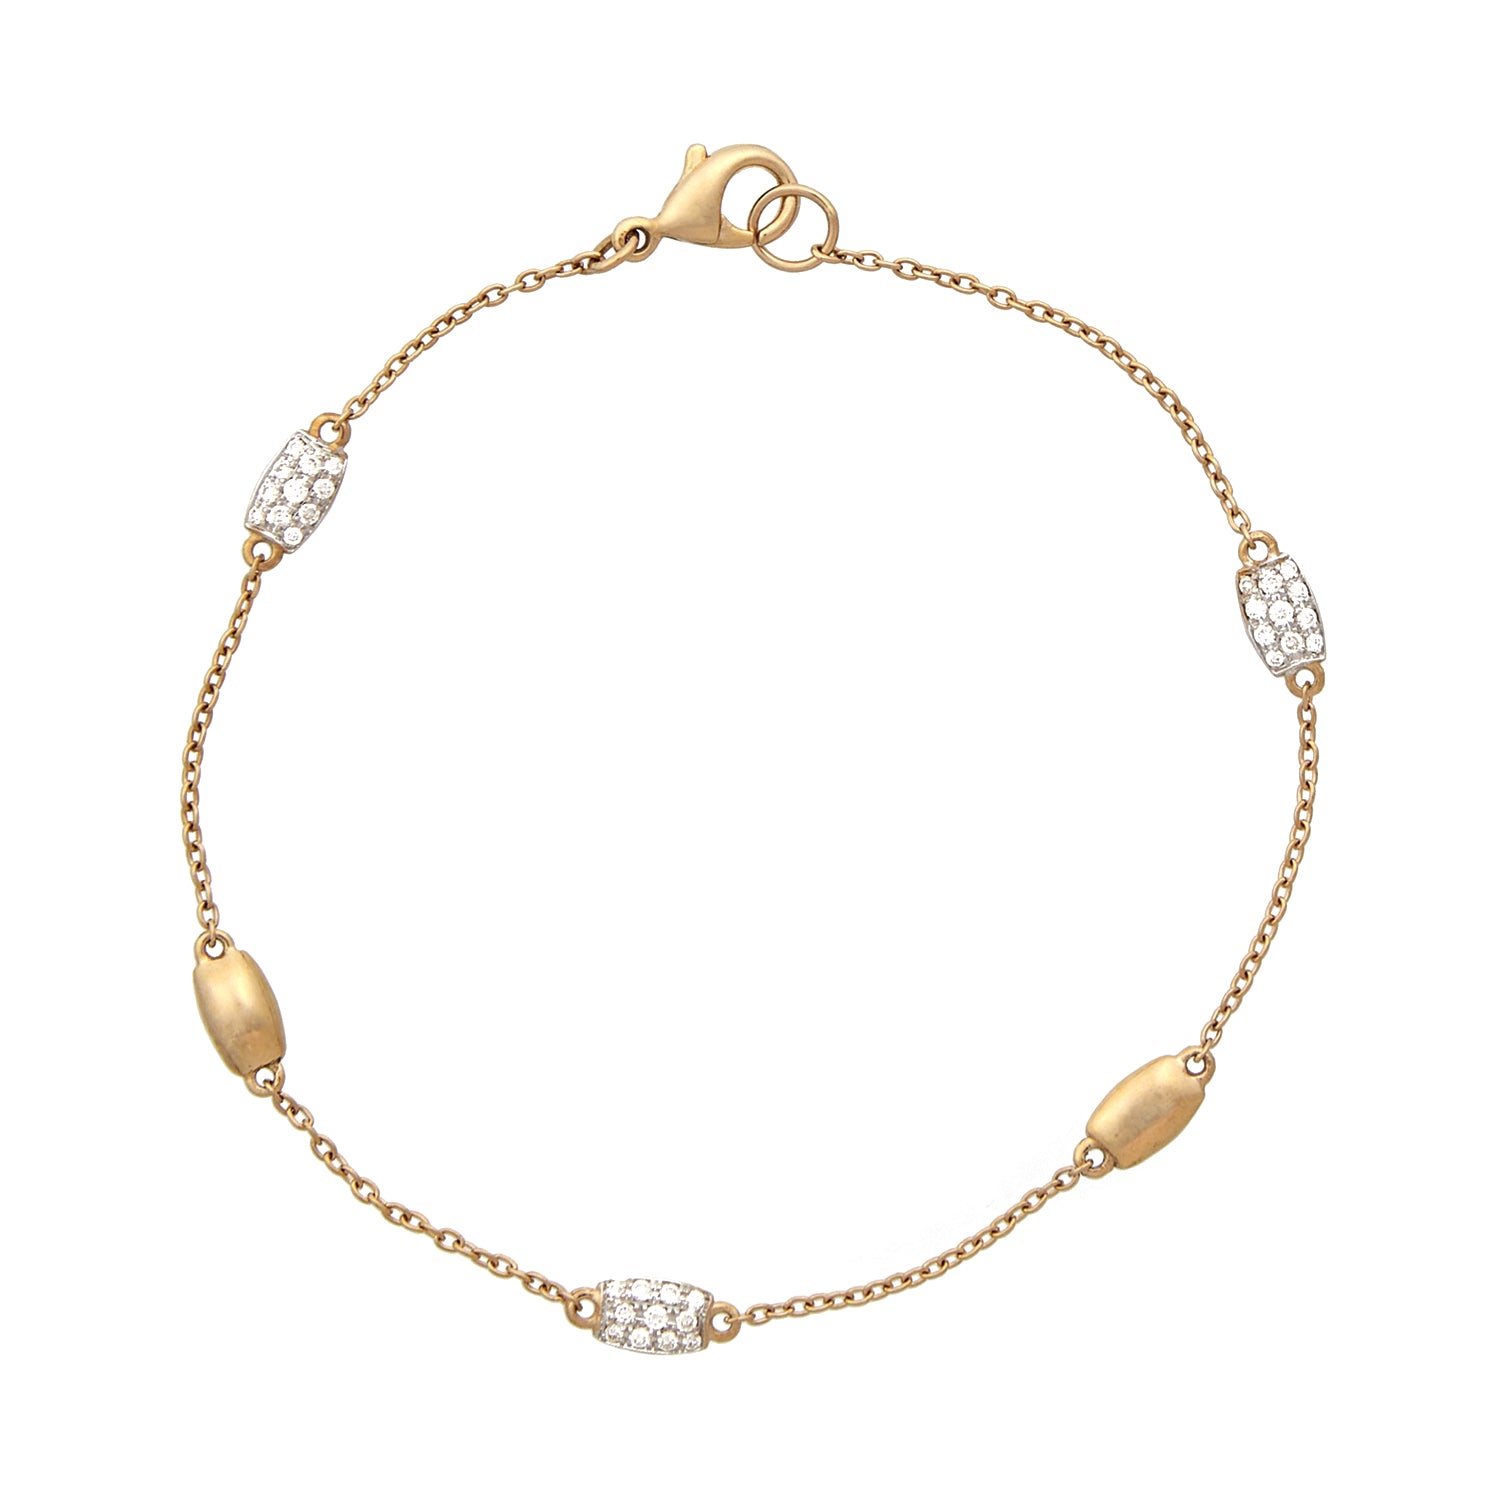 Rose gold bracelet with diamond